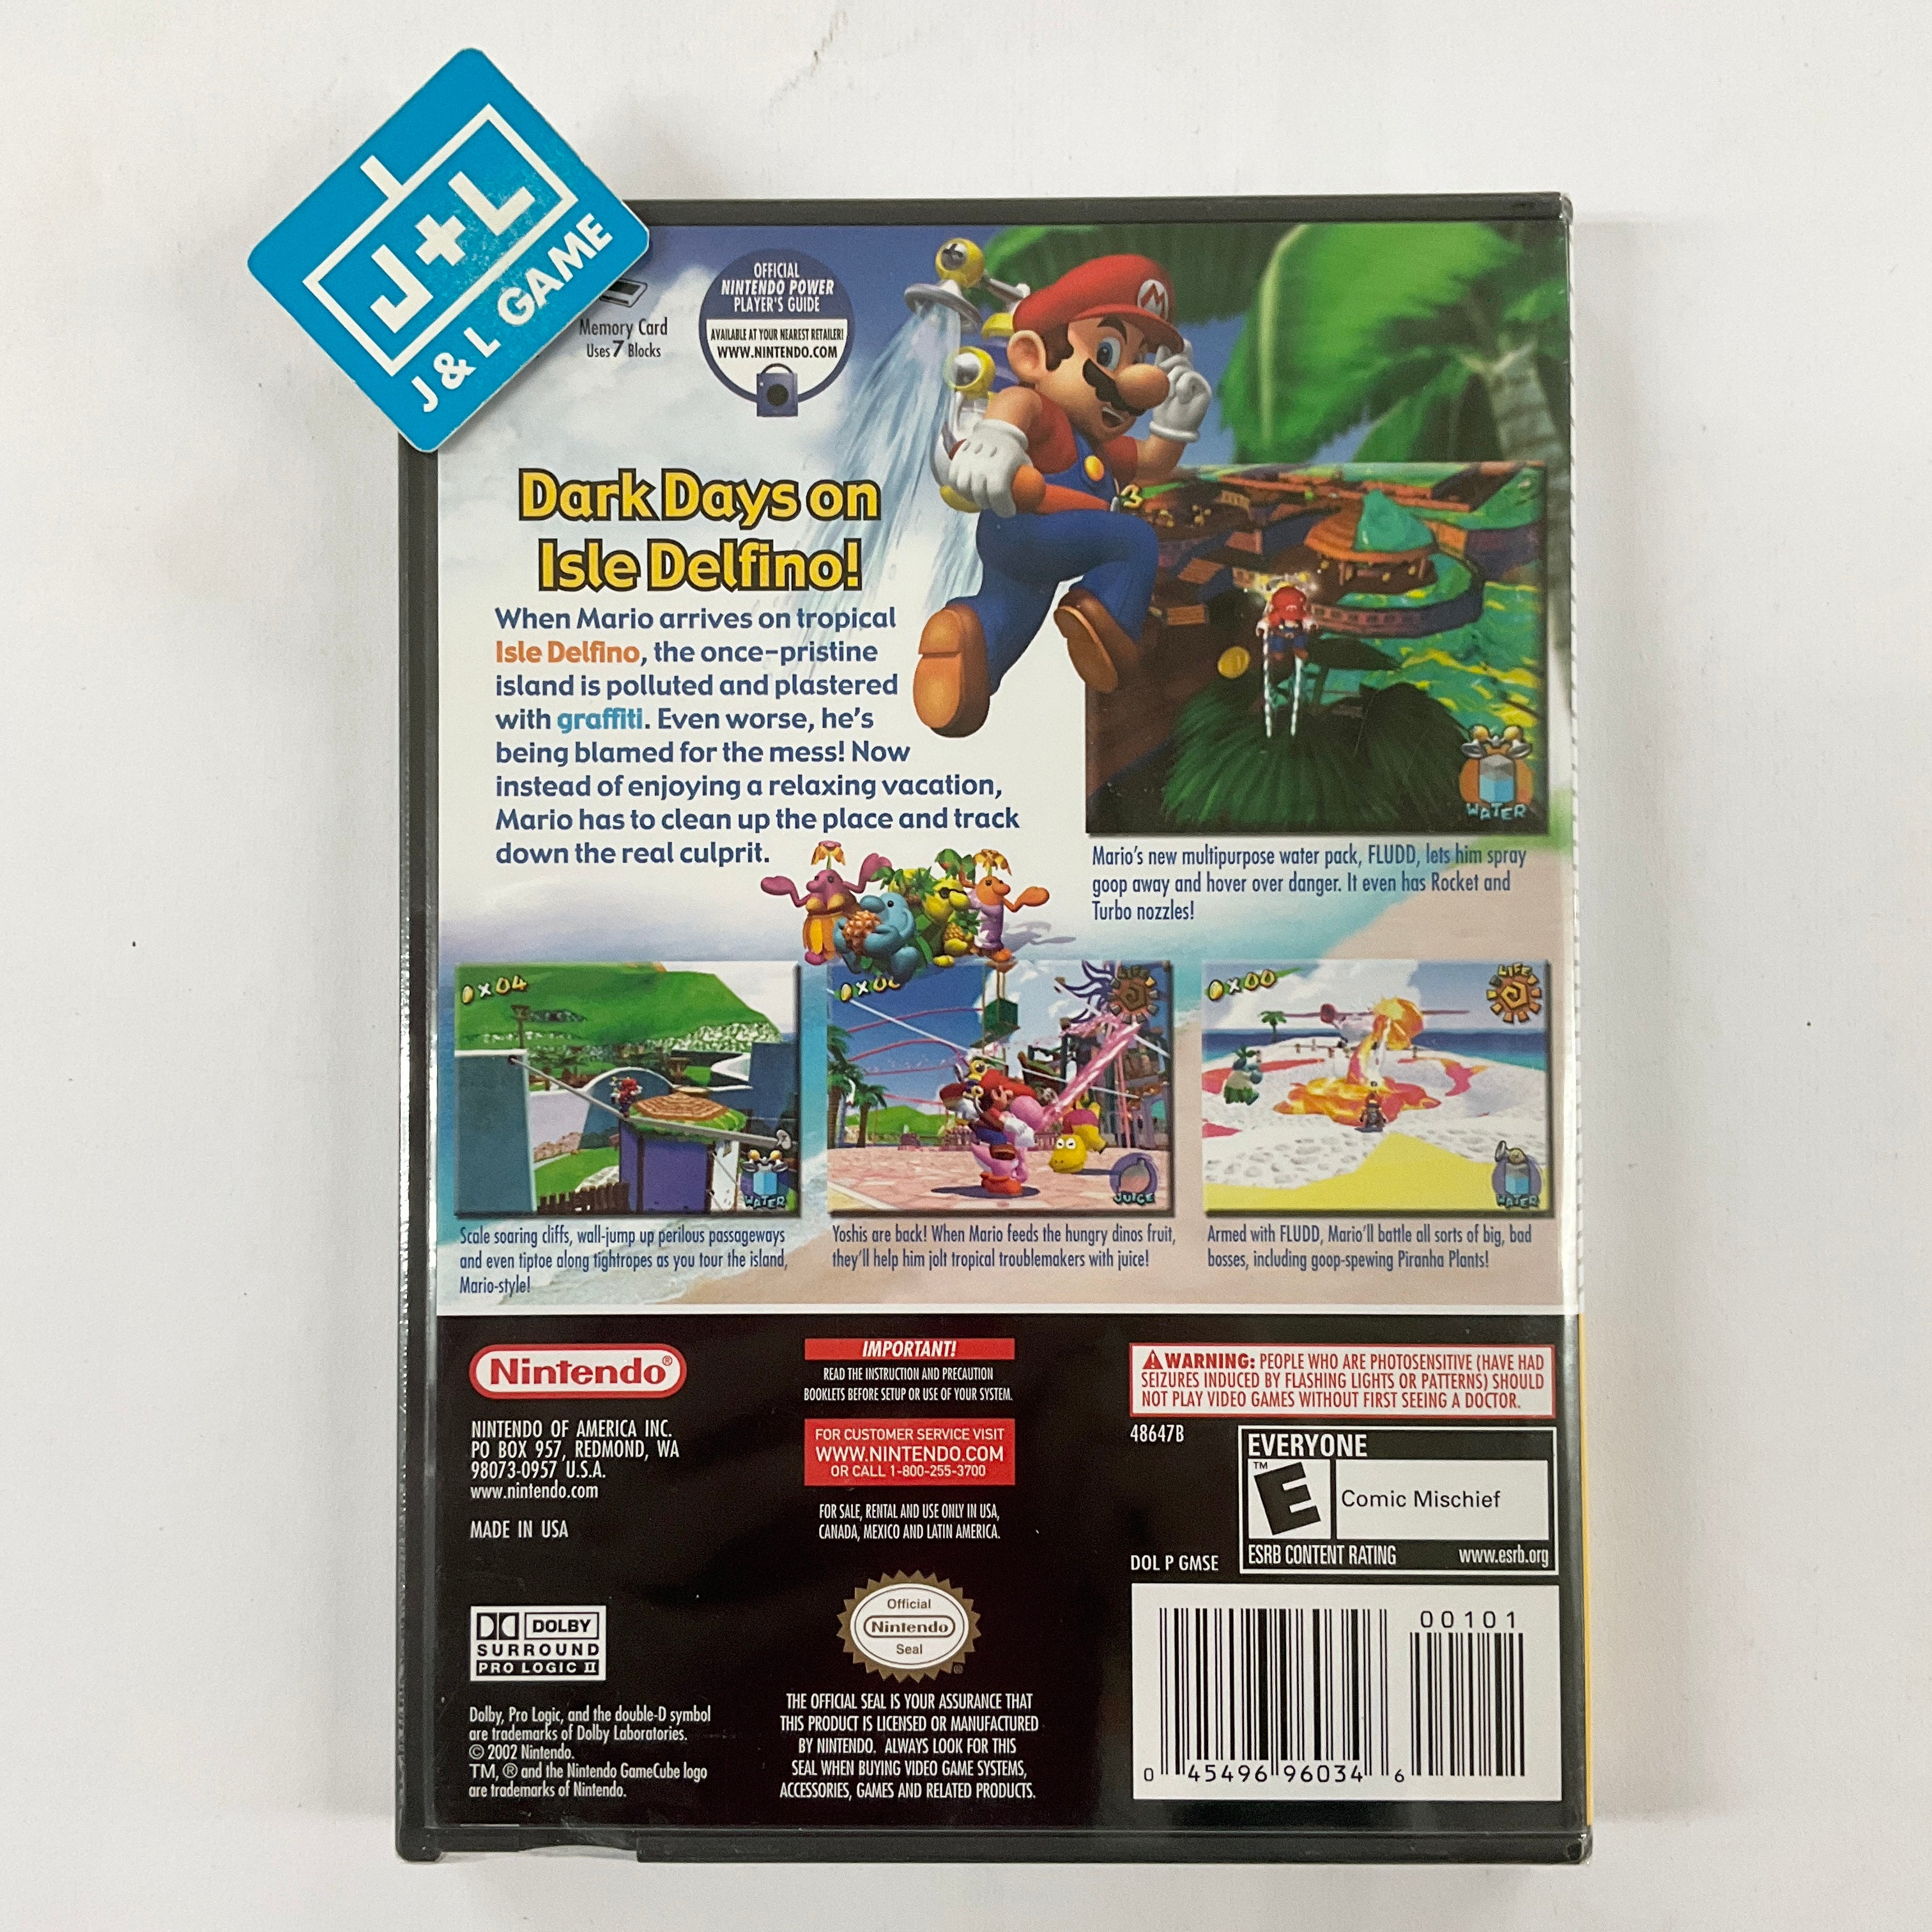 Super Mario Sunshine (Player's Choice) - (GC) GameCube Video Games Nintendo   